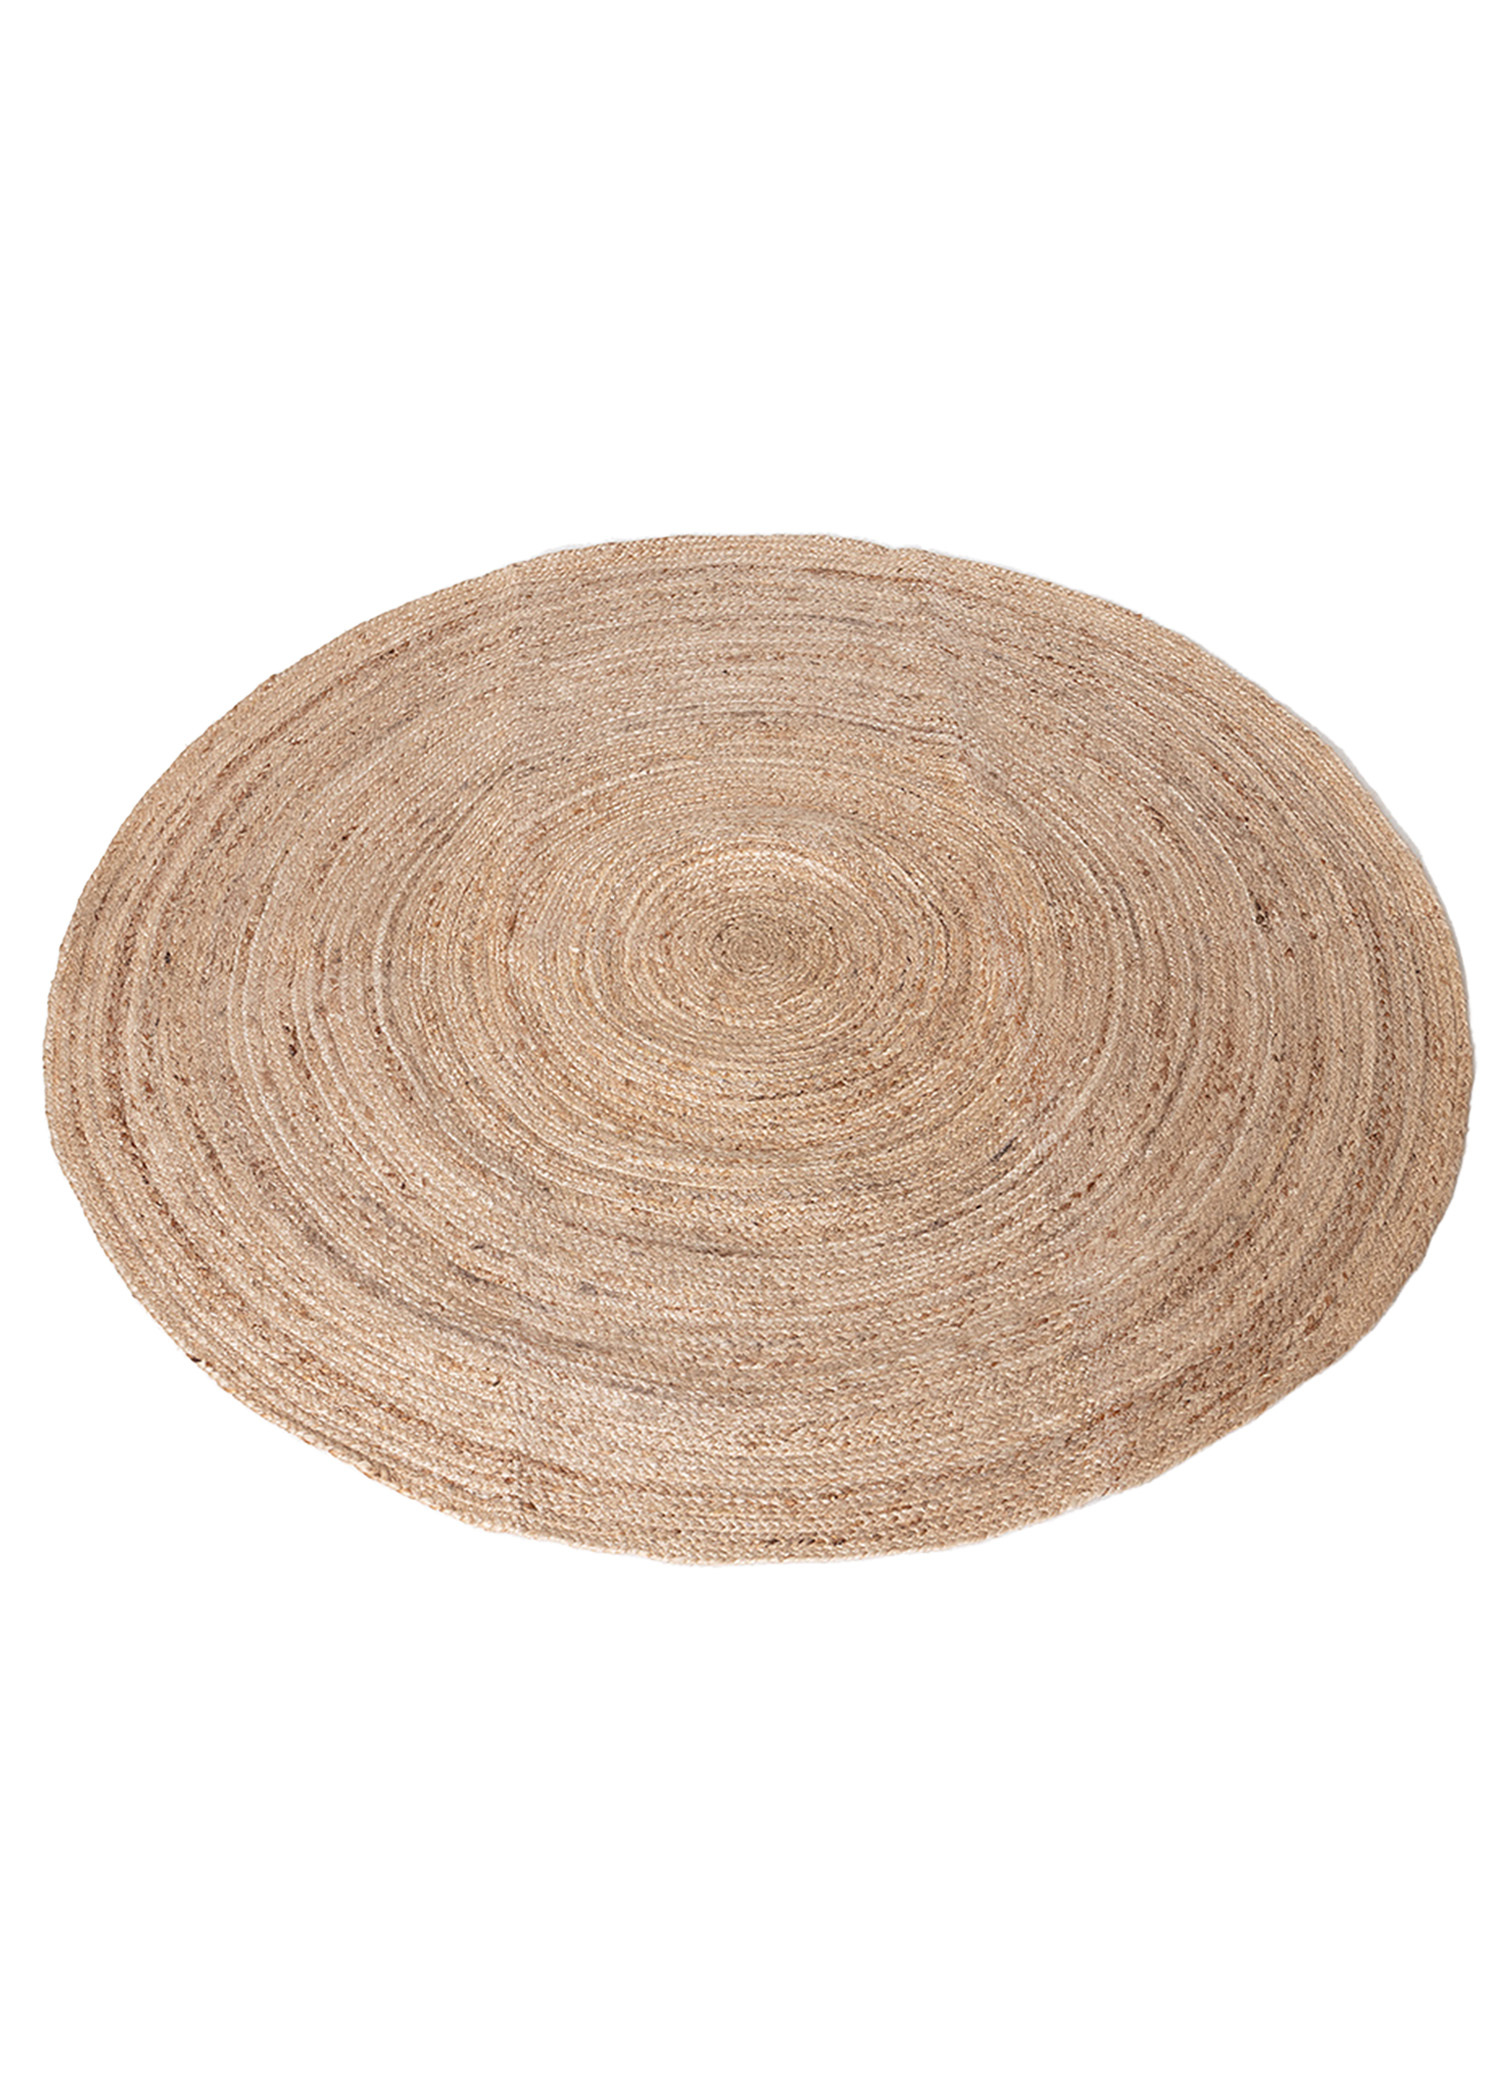 Round rug in jute